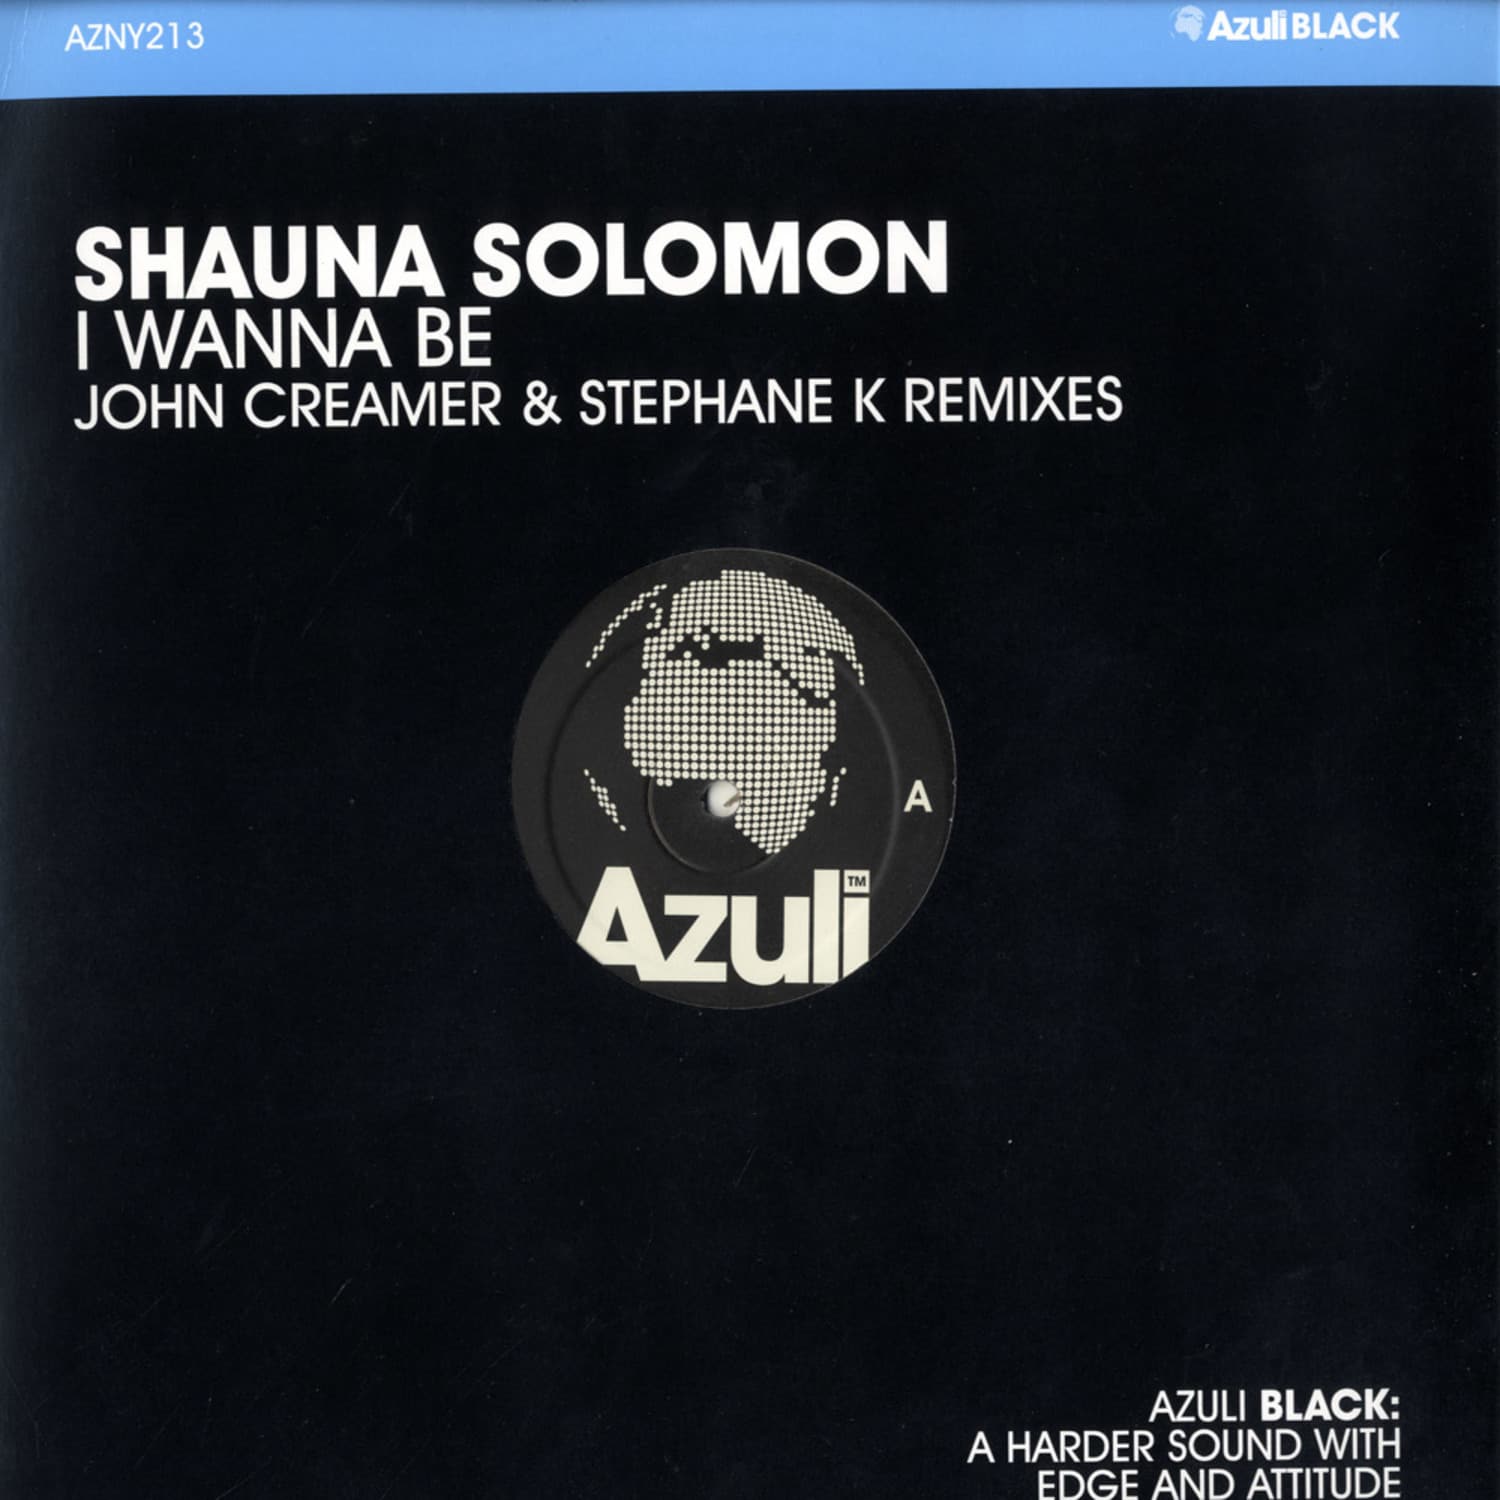 Shauna Solomon - I WANNA BE